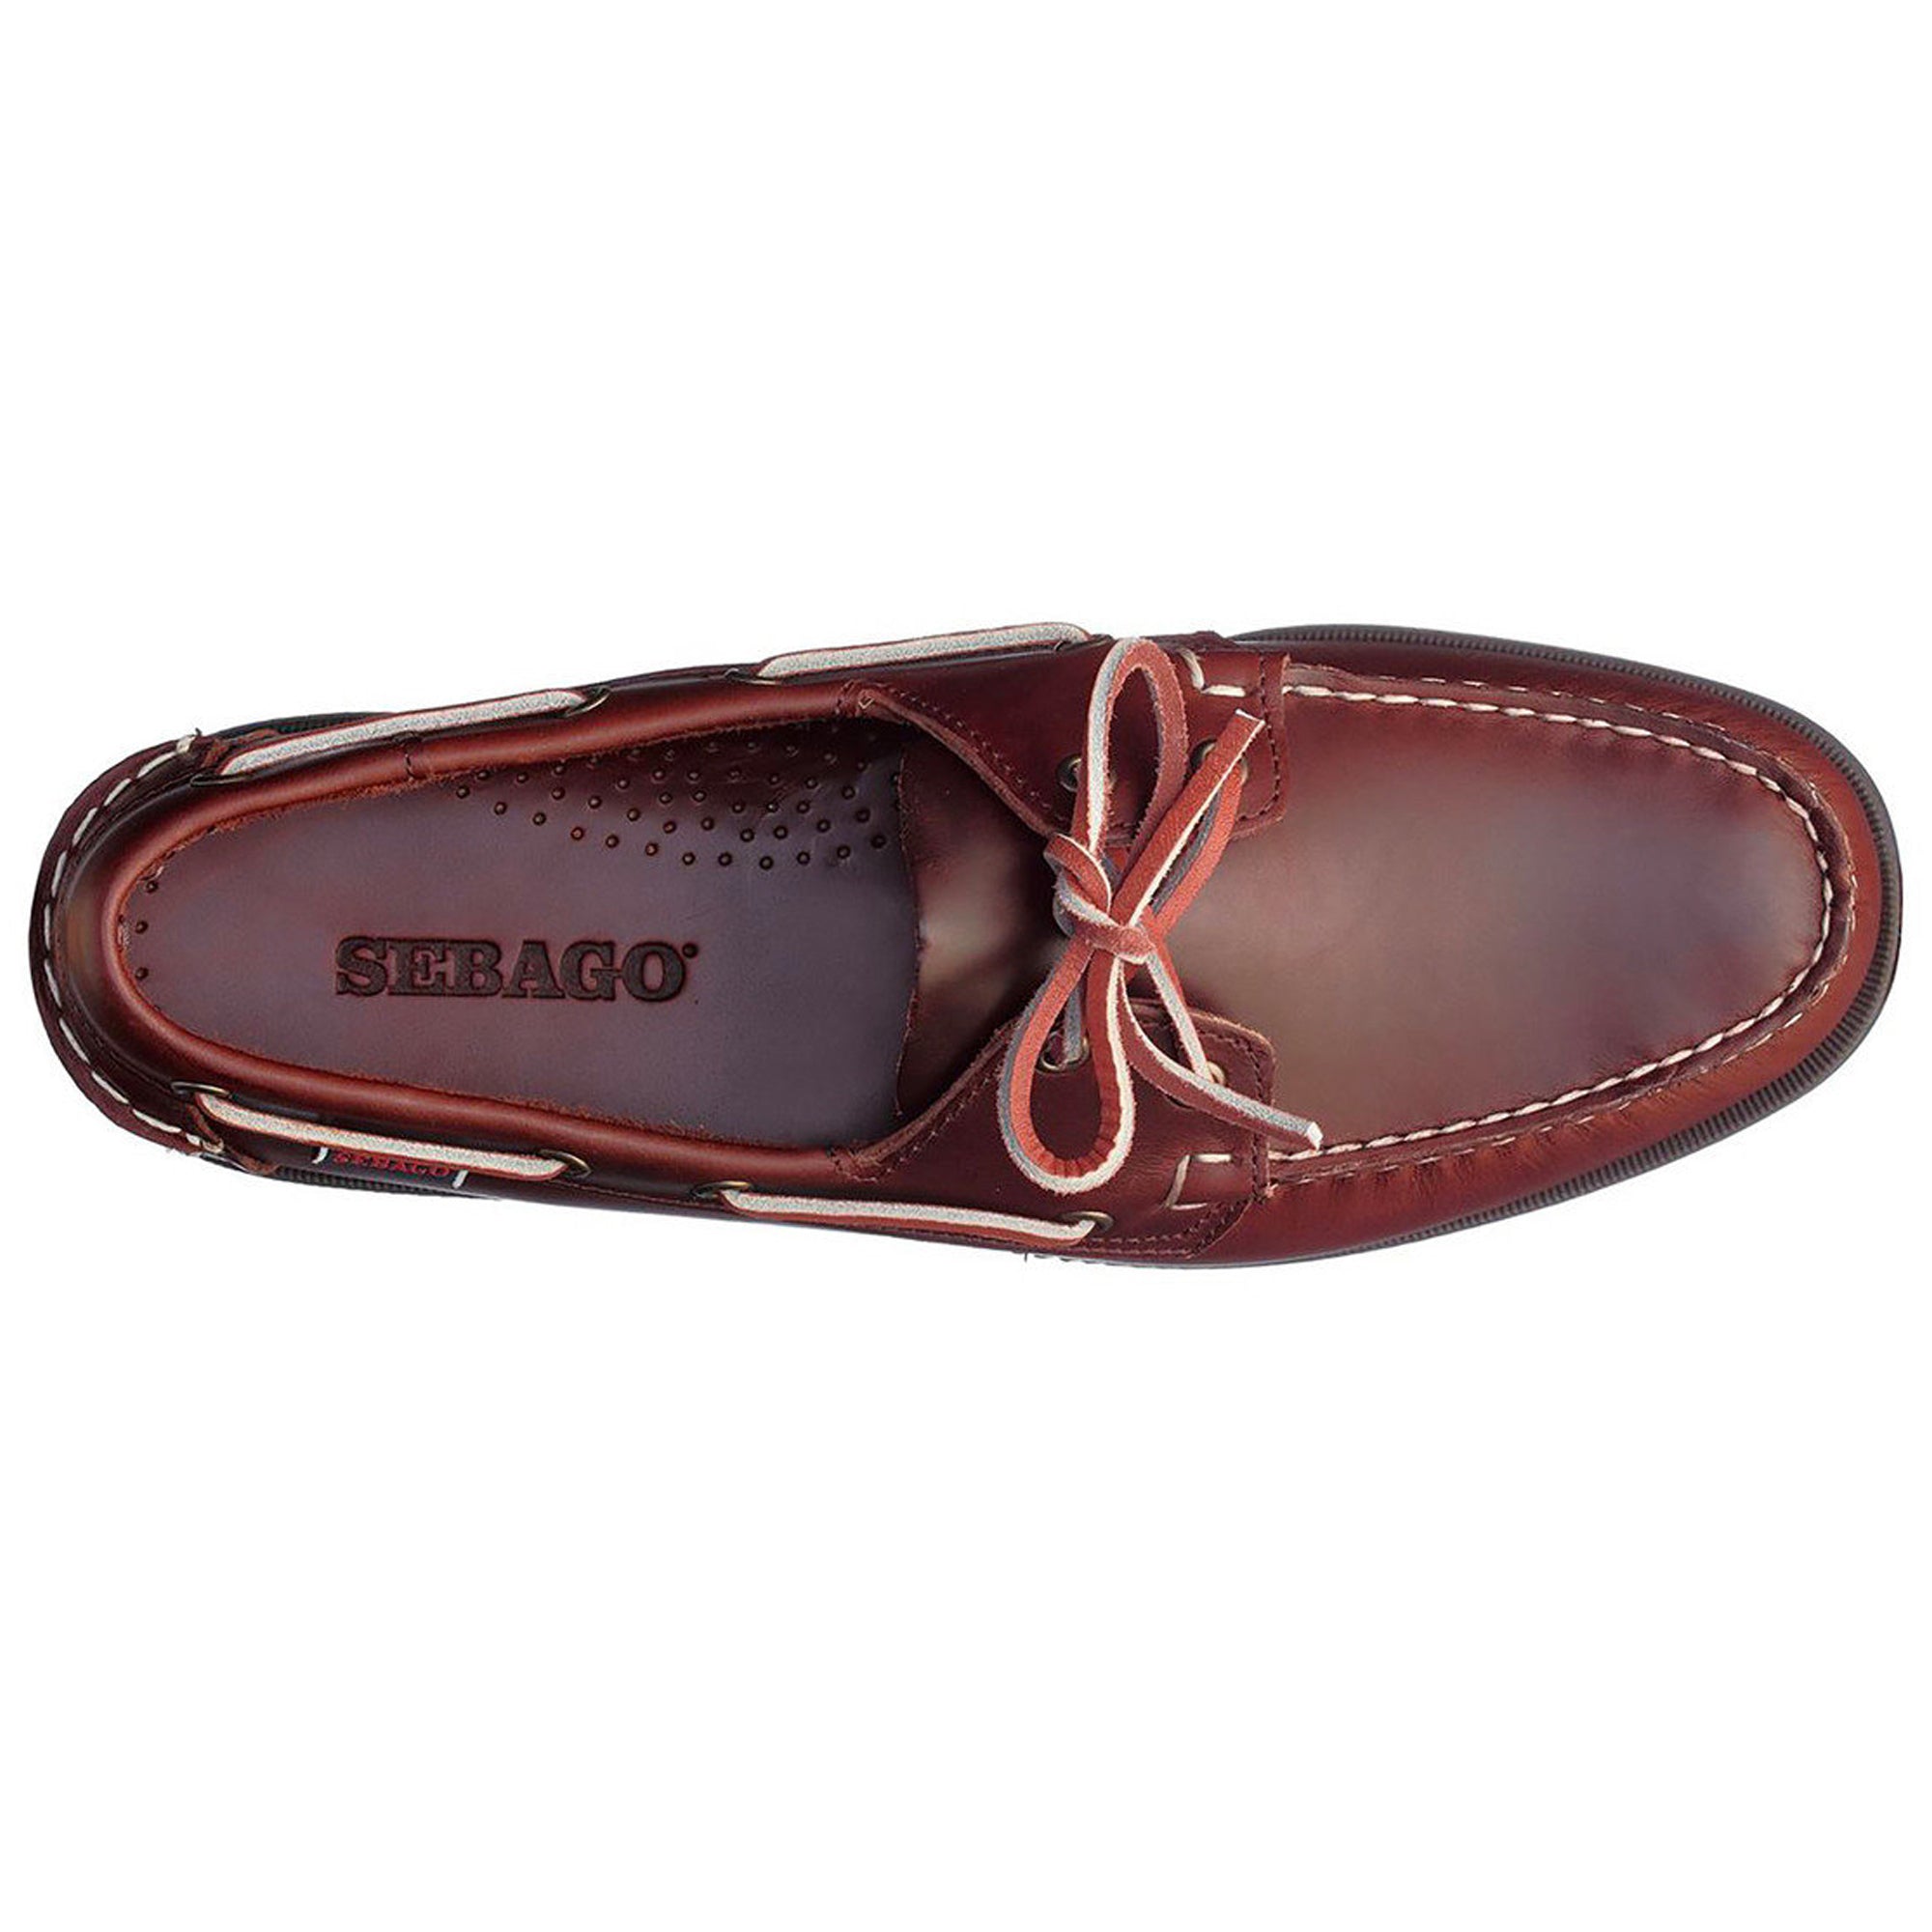 Sebago Docksides Portland Waxed Leather Boat Shoes - Brown Gum